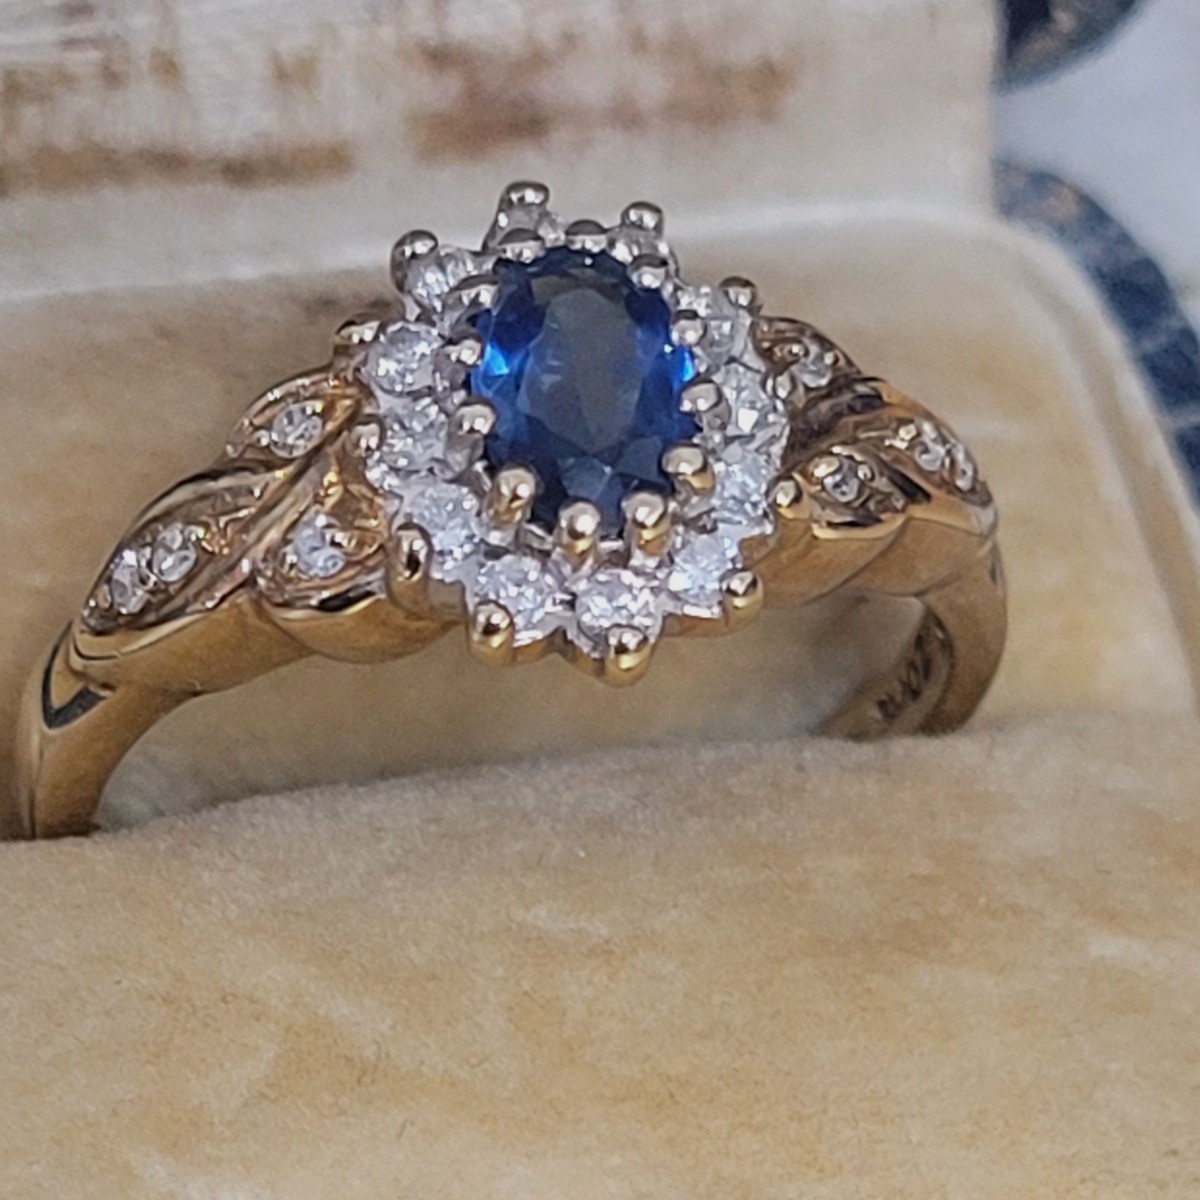 Buy popular gemstone engagement rings